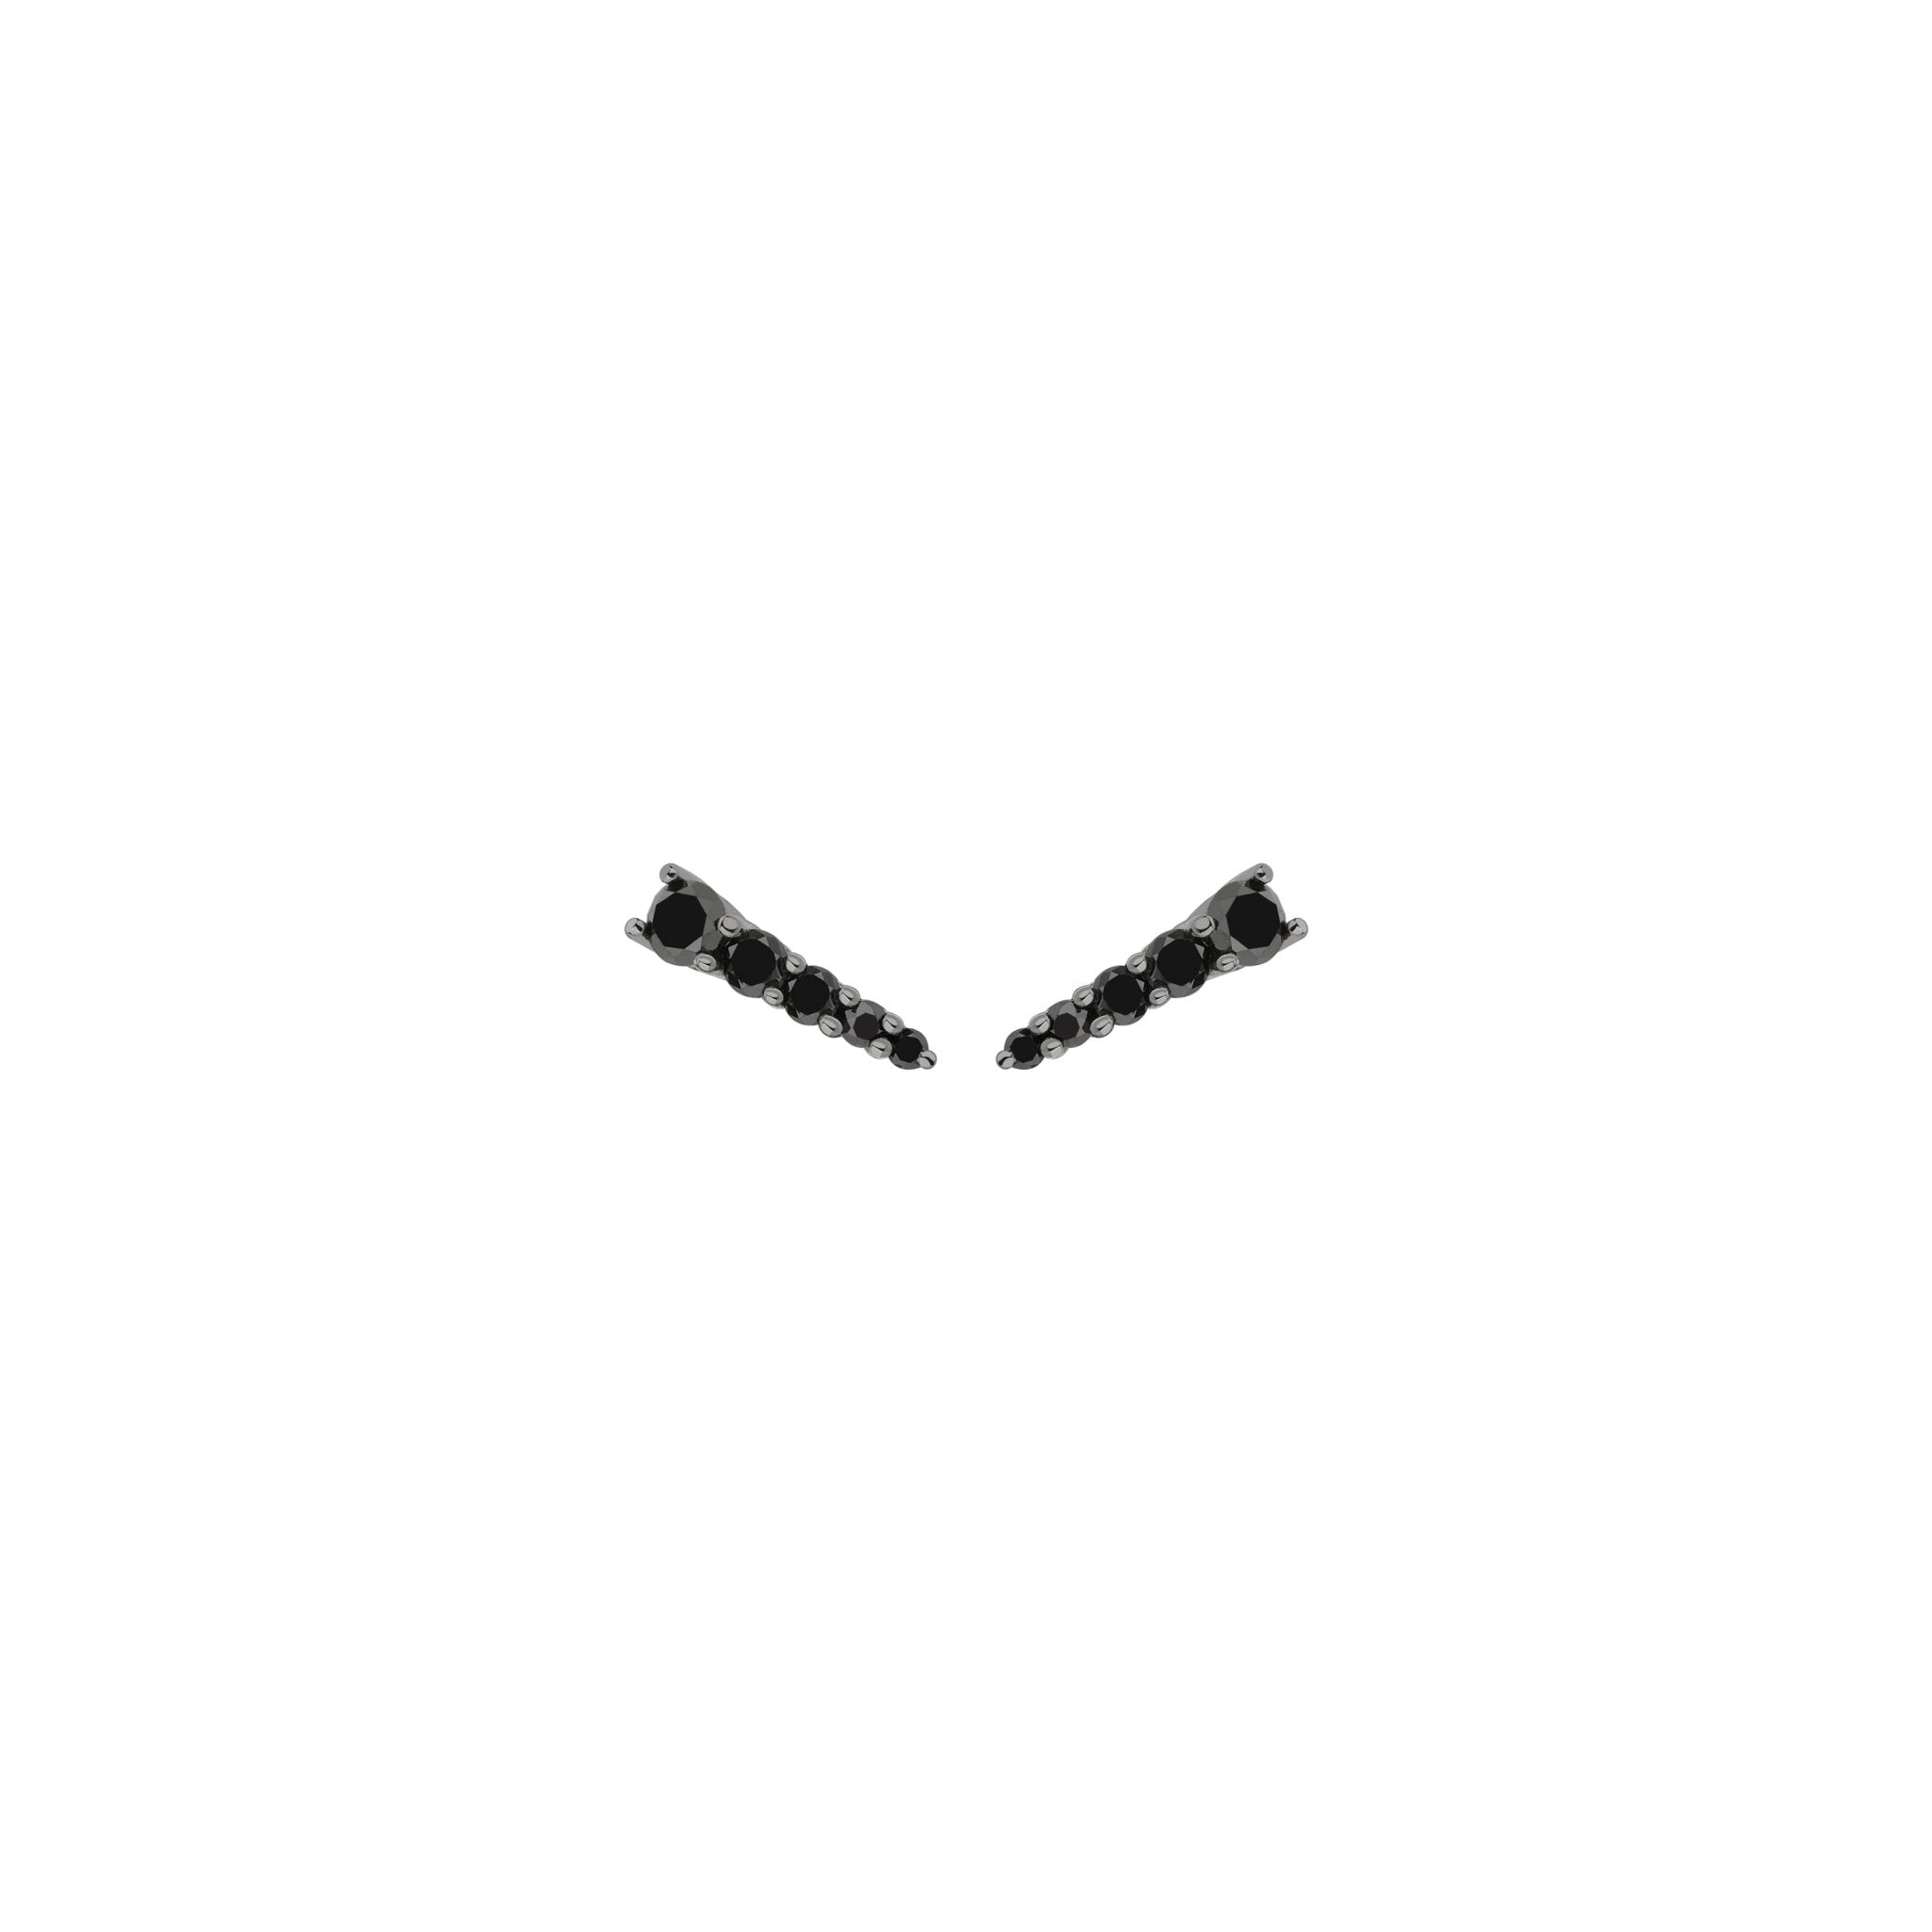 Brinco Ear Cuff Rock Star - P | Ouro Branco 18K com Ródio Negro e Diamantes Negros - Jack Vartanian - Ear Cuffs